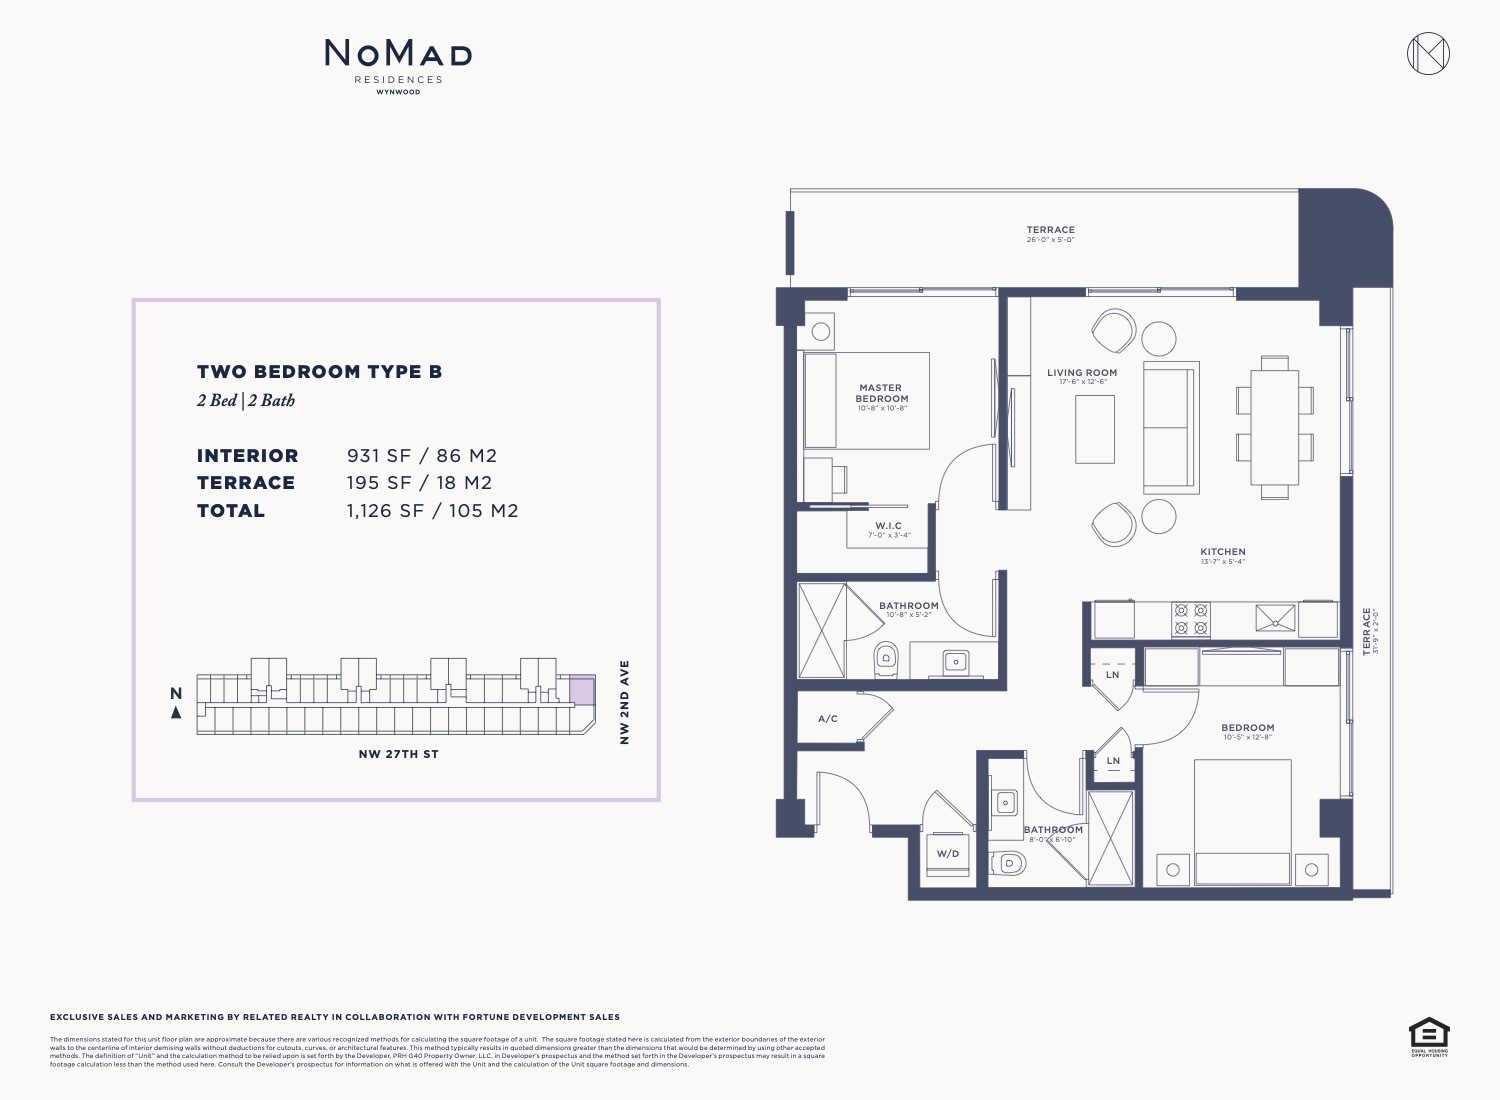 Floor Plan for Nomad Wynwood Floorplans, Two Bedroom Type B